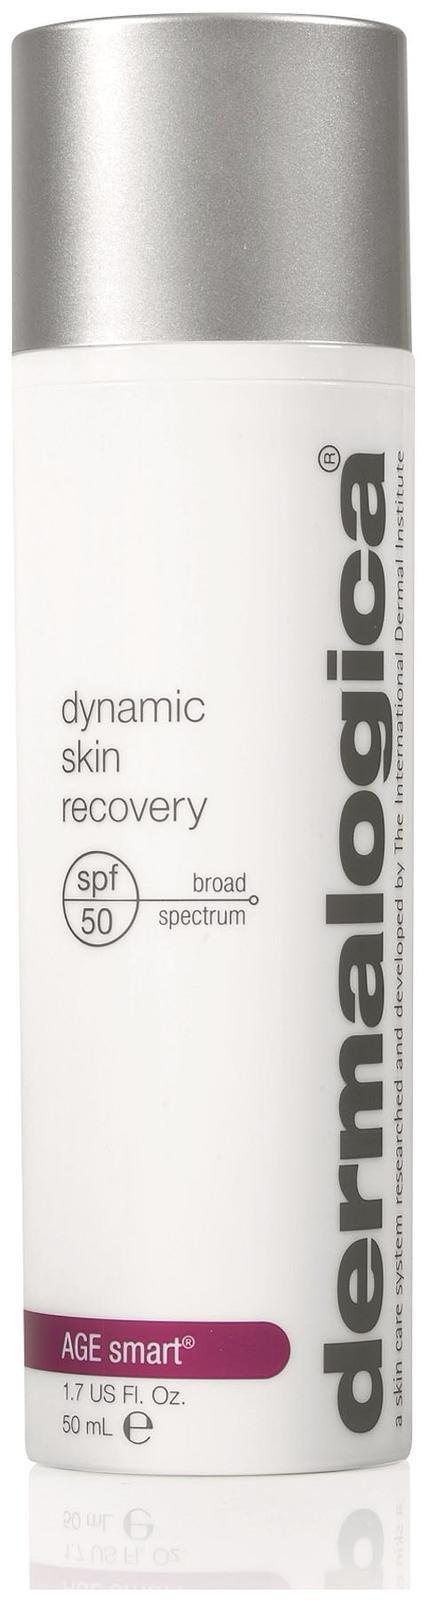 Dermalogica Dynamic Skin Recovery - Spf 50 - 1.7 Oz